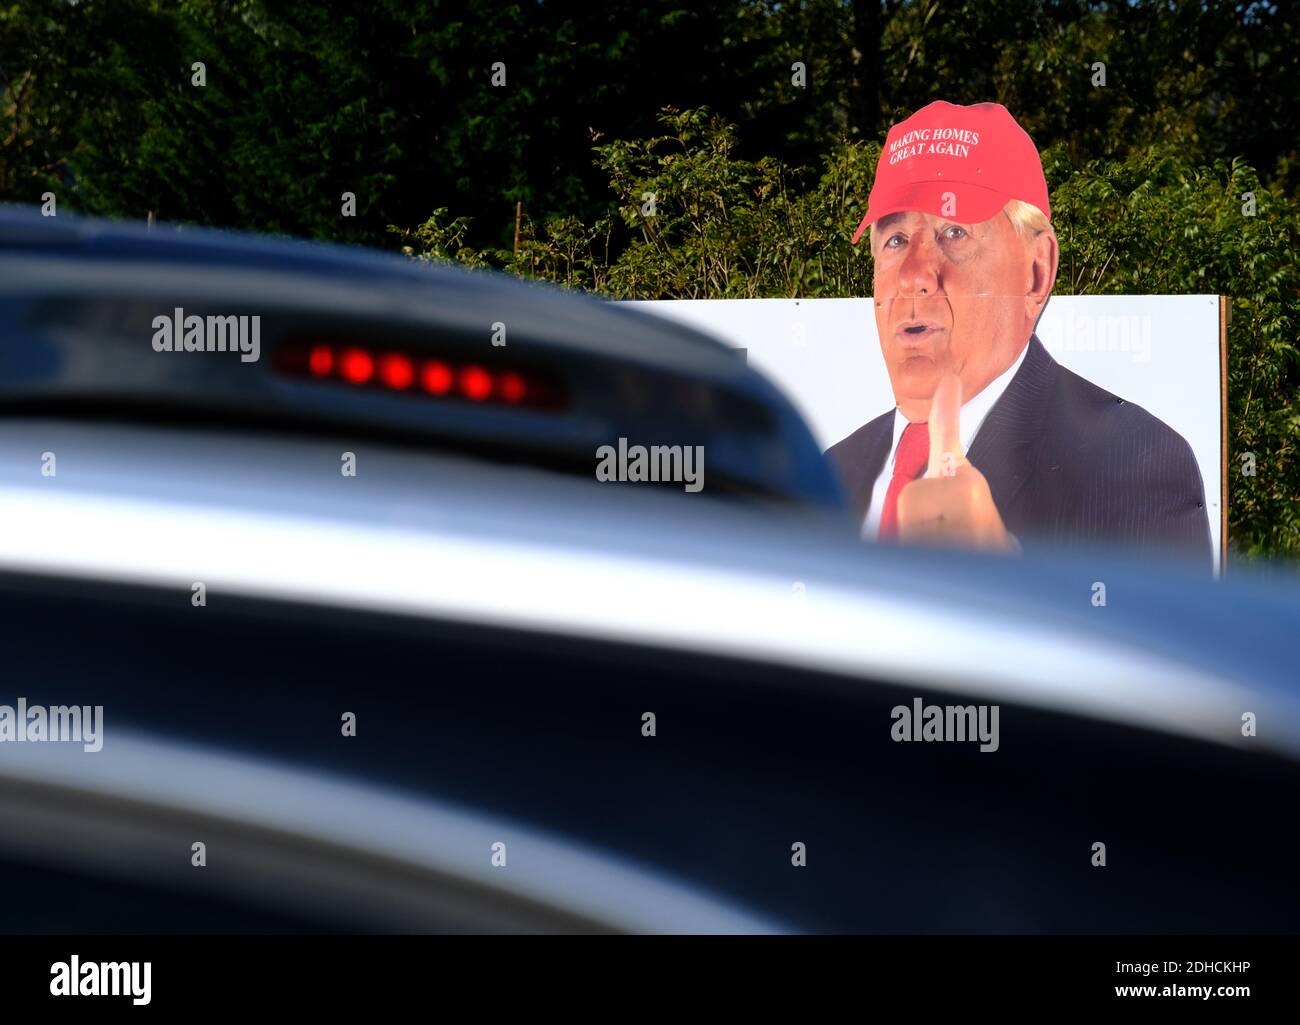 Trump lookalike on hoarding advertising new housing project, Carrickfergus Stock Photo